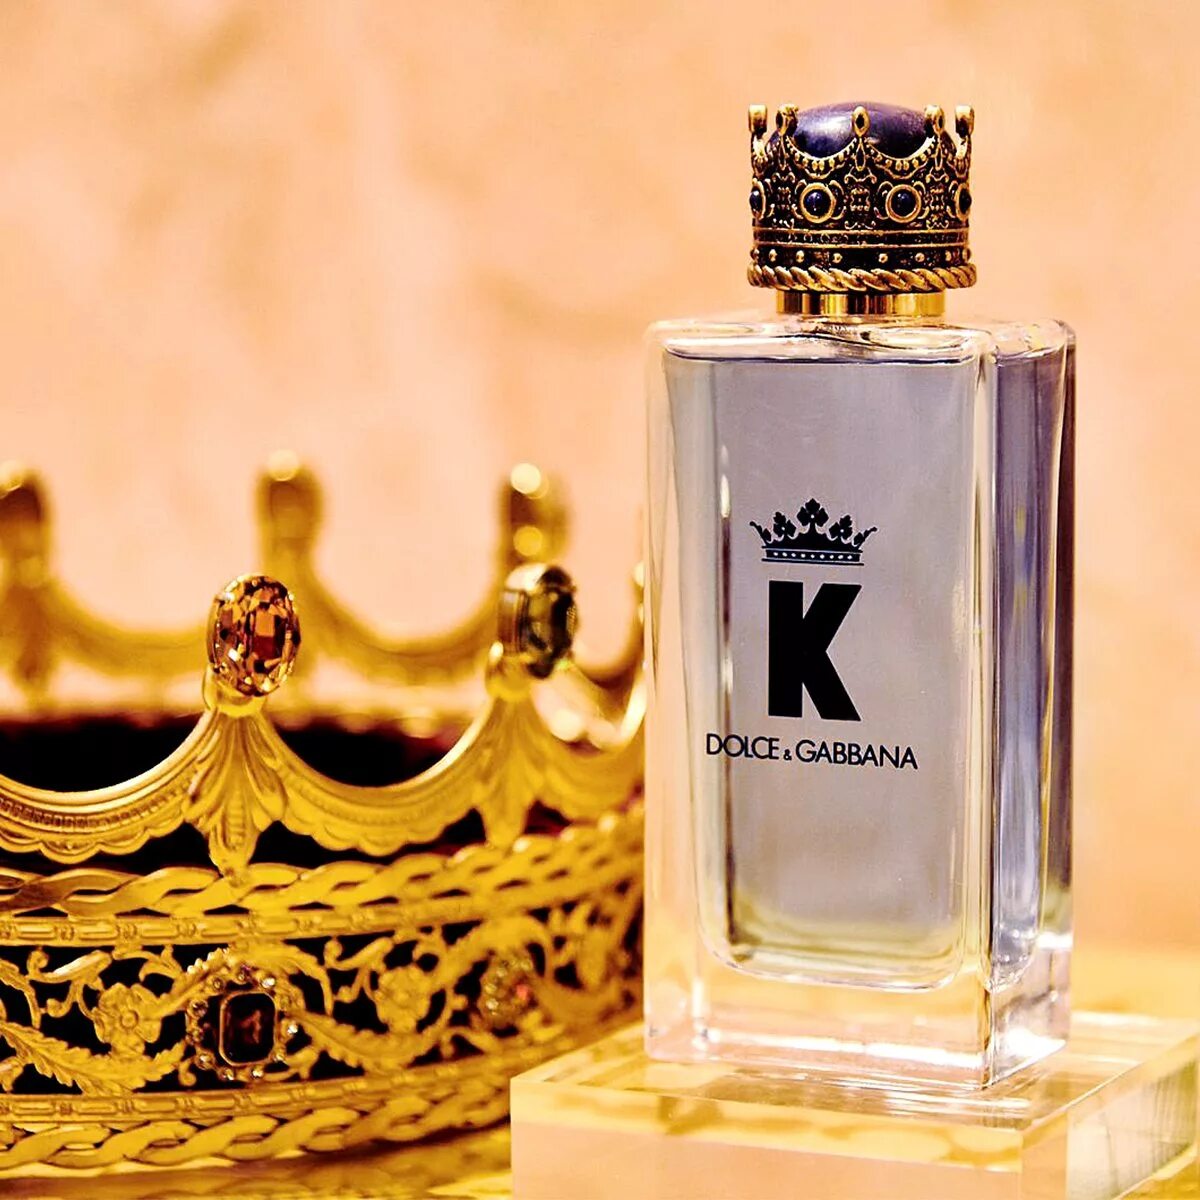 Дольче габбана 100мл. Dolce Gabbana King 100ml. Dolce Gabbana King Parfum. Dolce & Gabbana King Eau de Parfum 100 ml. Dolce Gabbana k King 100ml EDT.